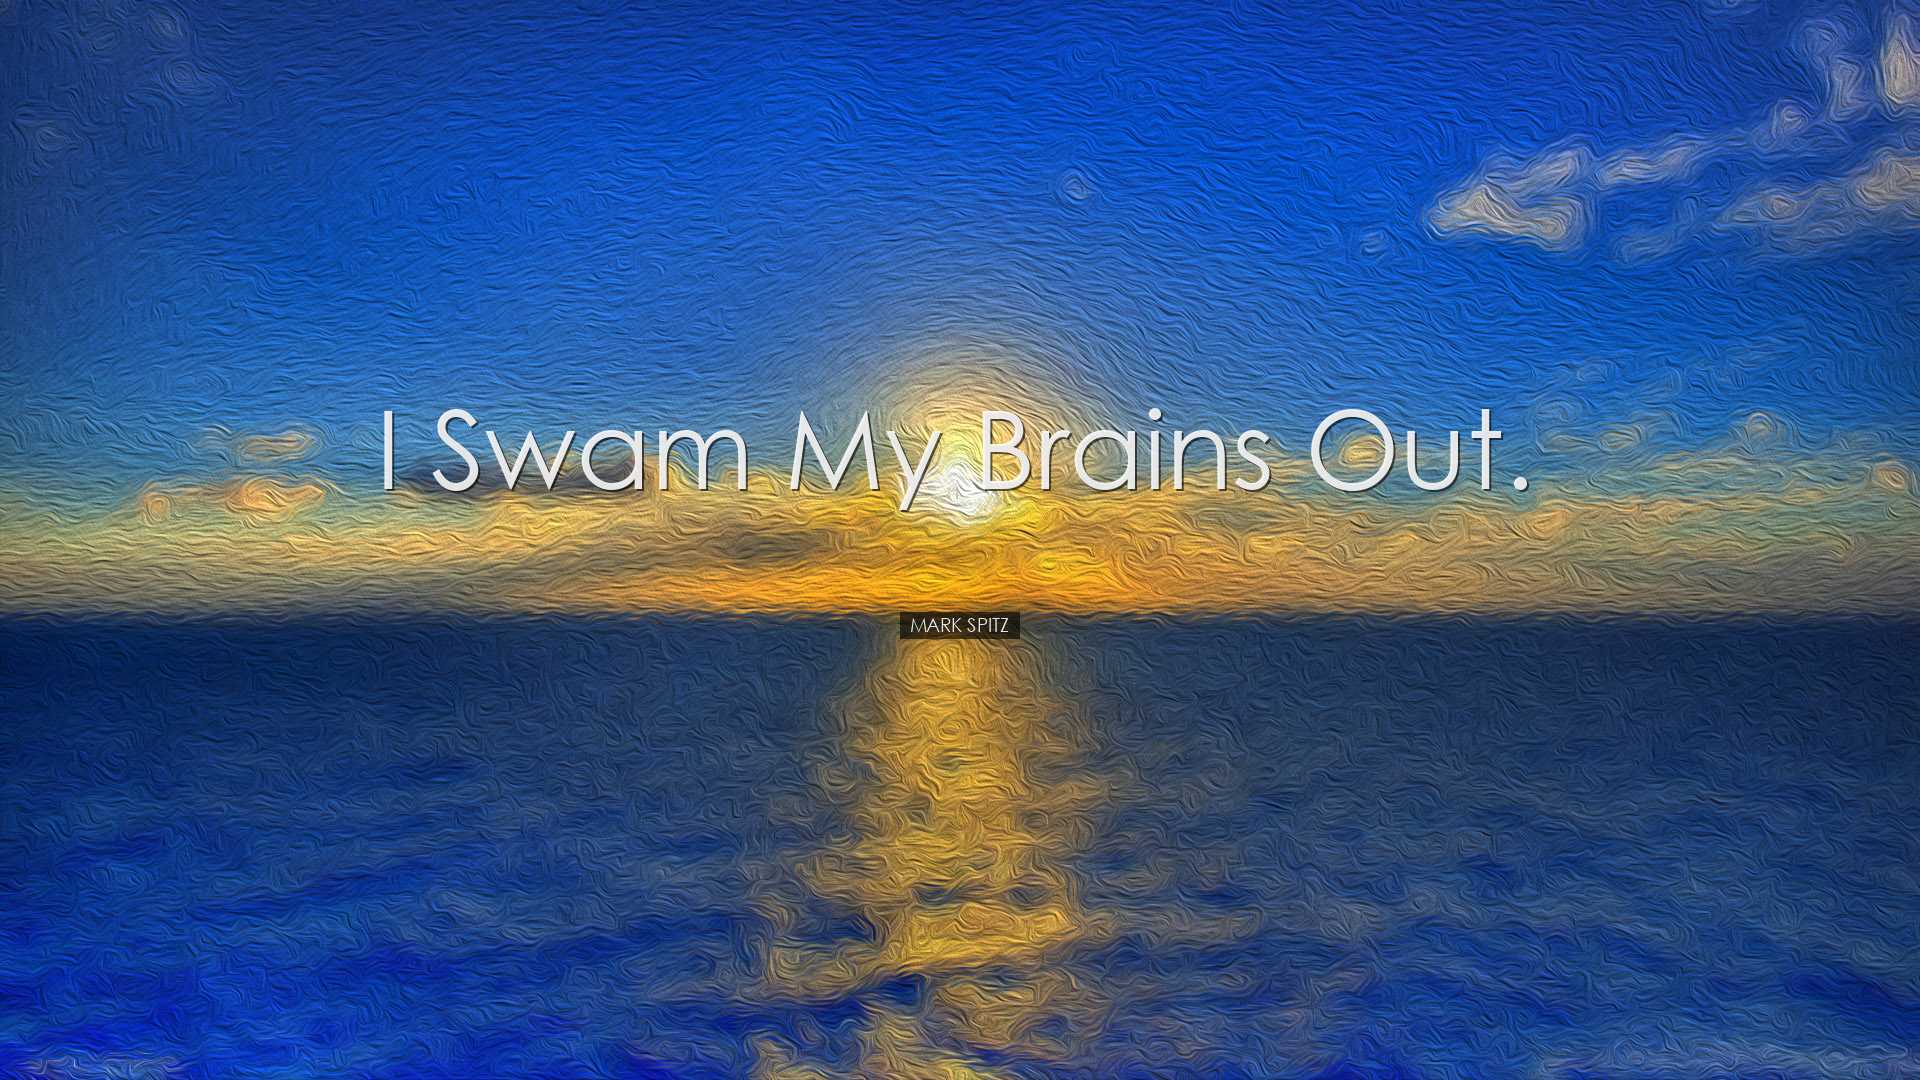 I swam my brains out. - Mark Spitz